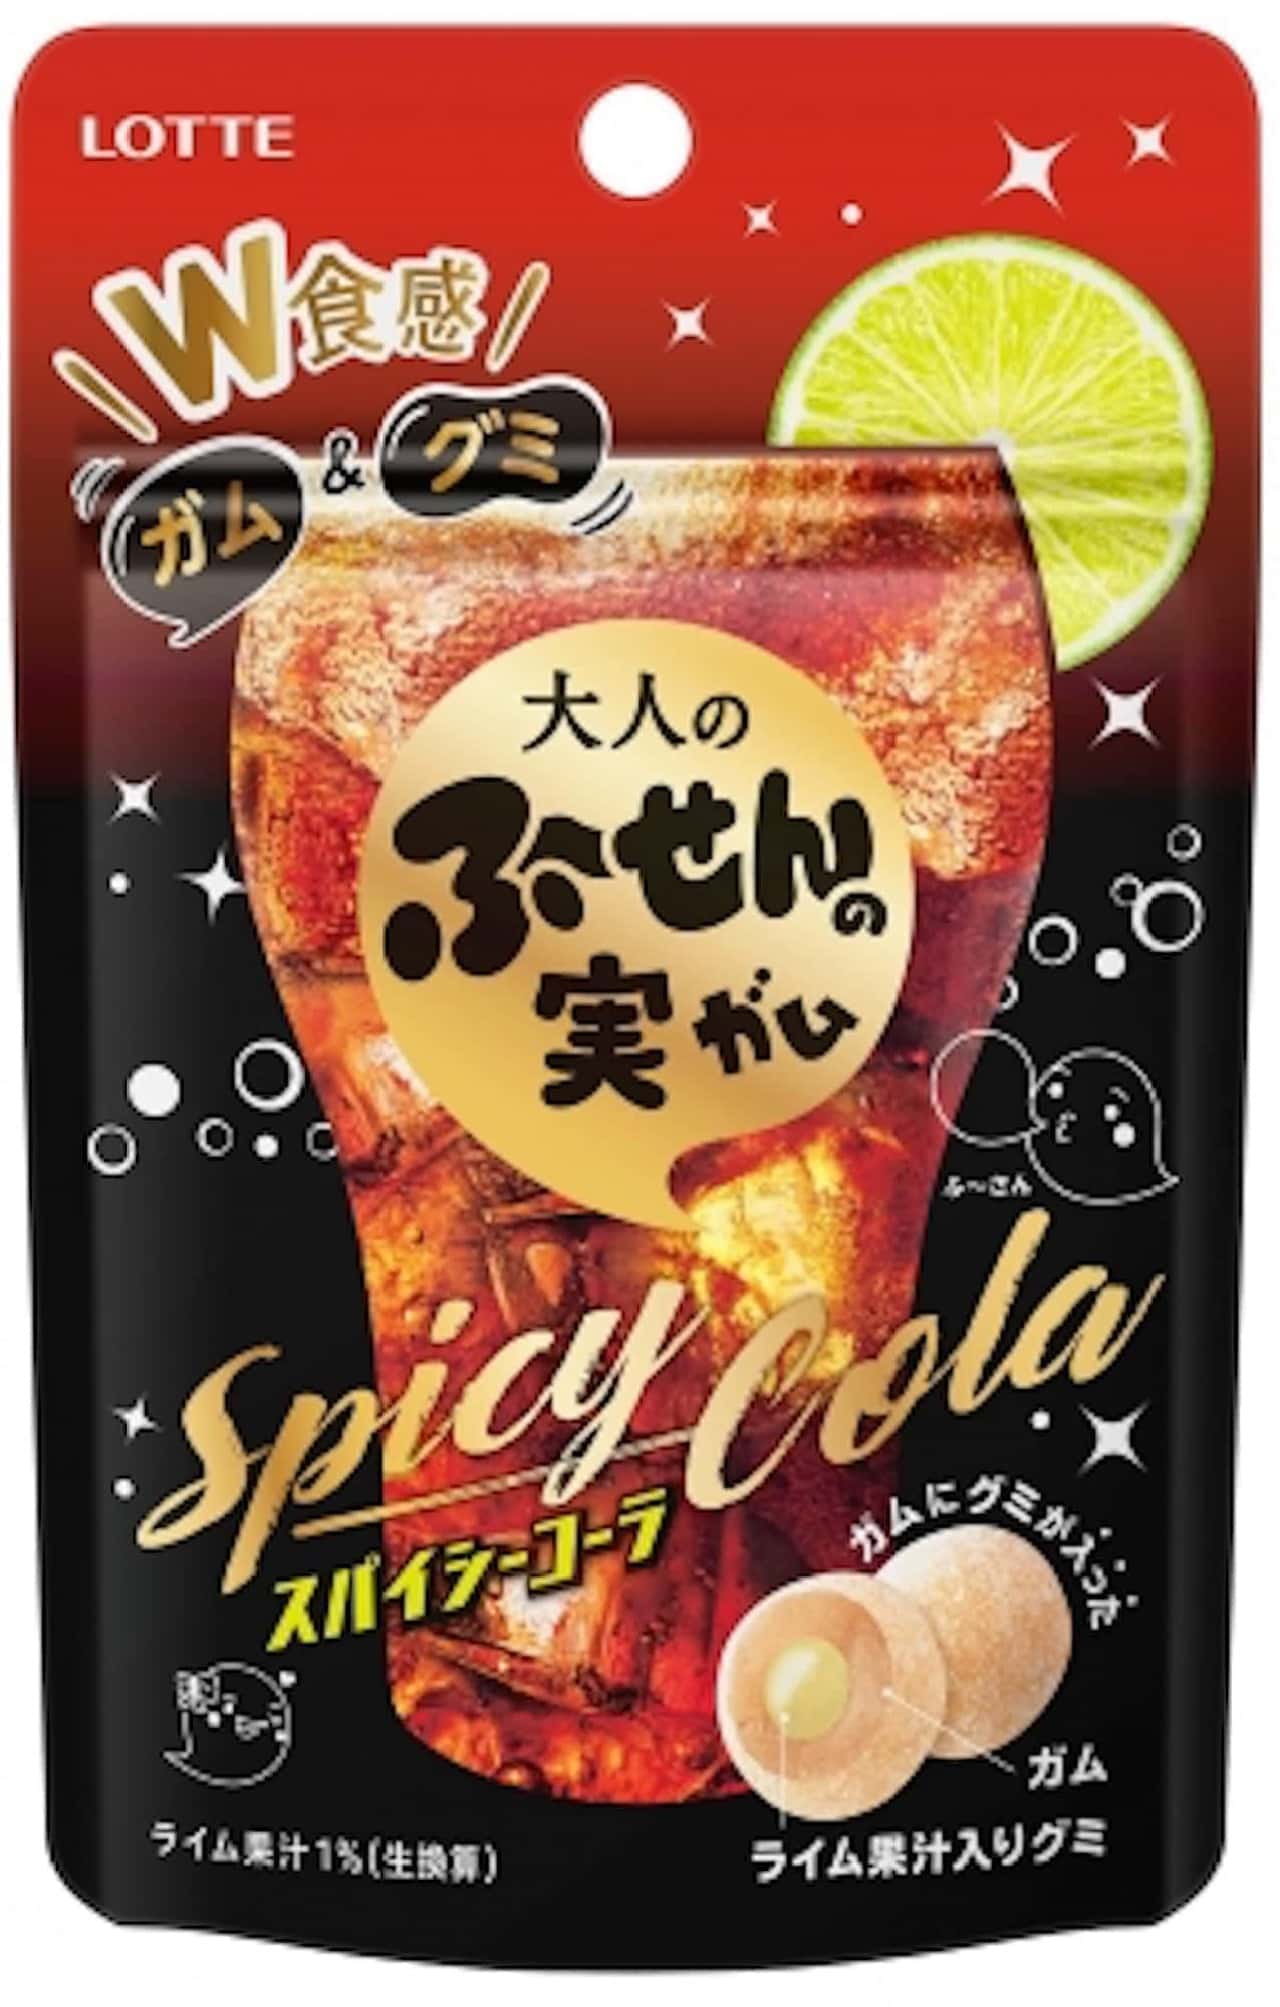 Lotte "Adult Fu-Sen no Mi [Spicy Coke]"